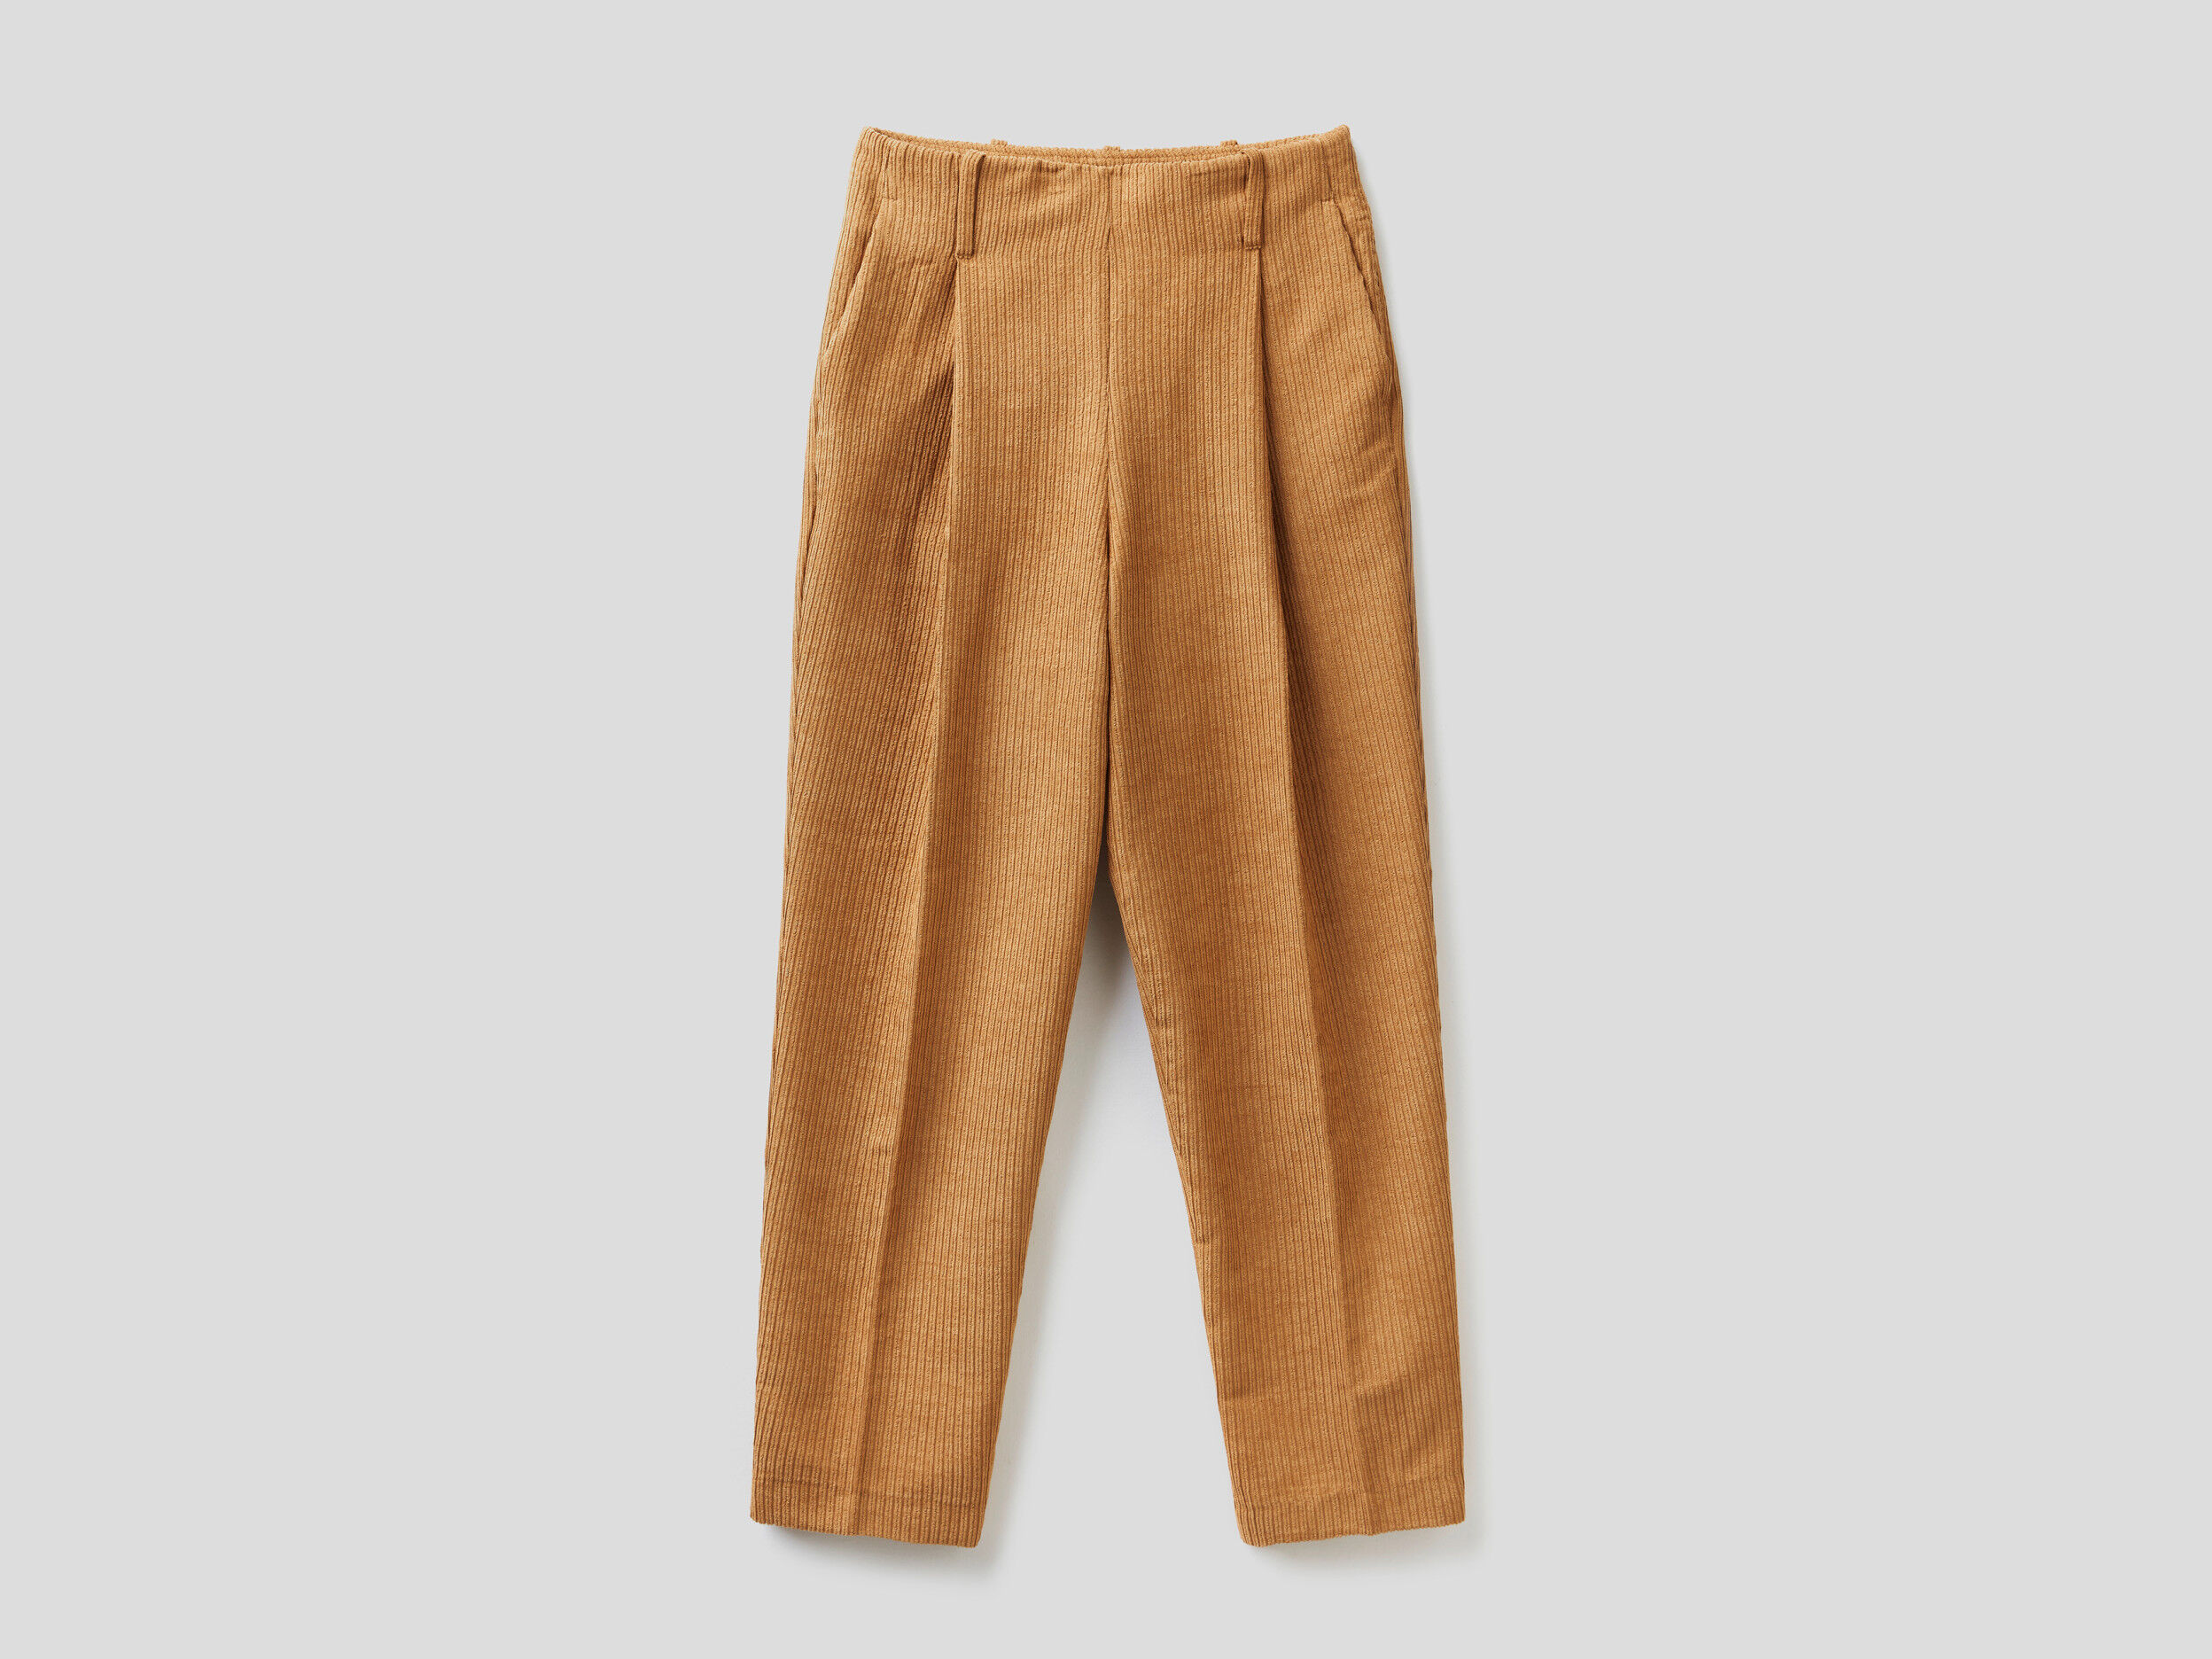 Custom Beige Wool Pants for Women Beige Wool Straight Pants With Crease  FTN1_104WOL - Etsy